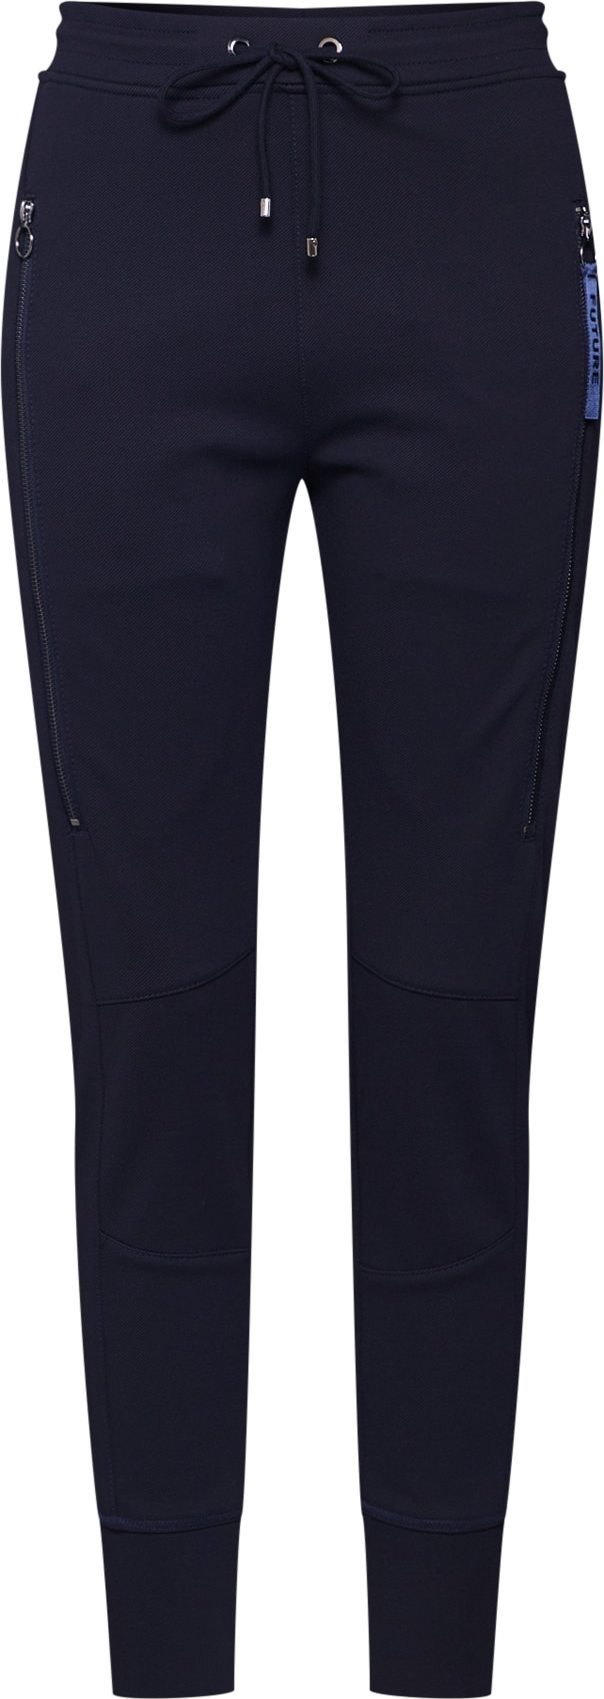 Kalhoty 'Future' MAC tmavě modrá